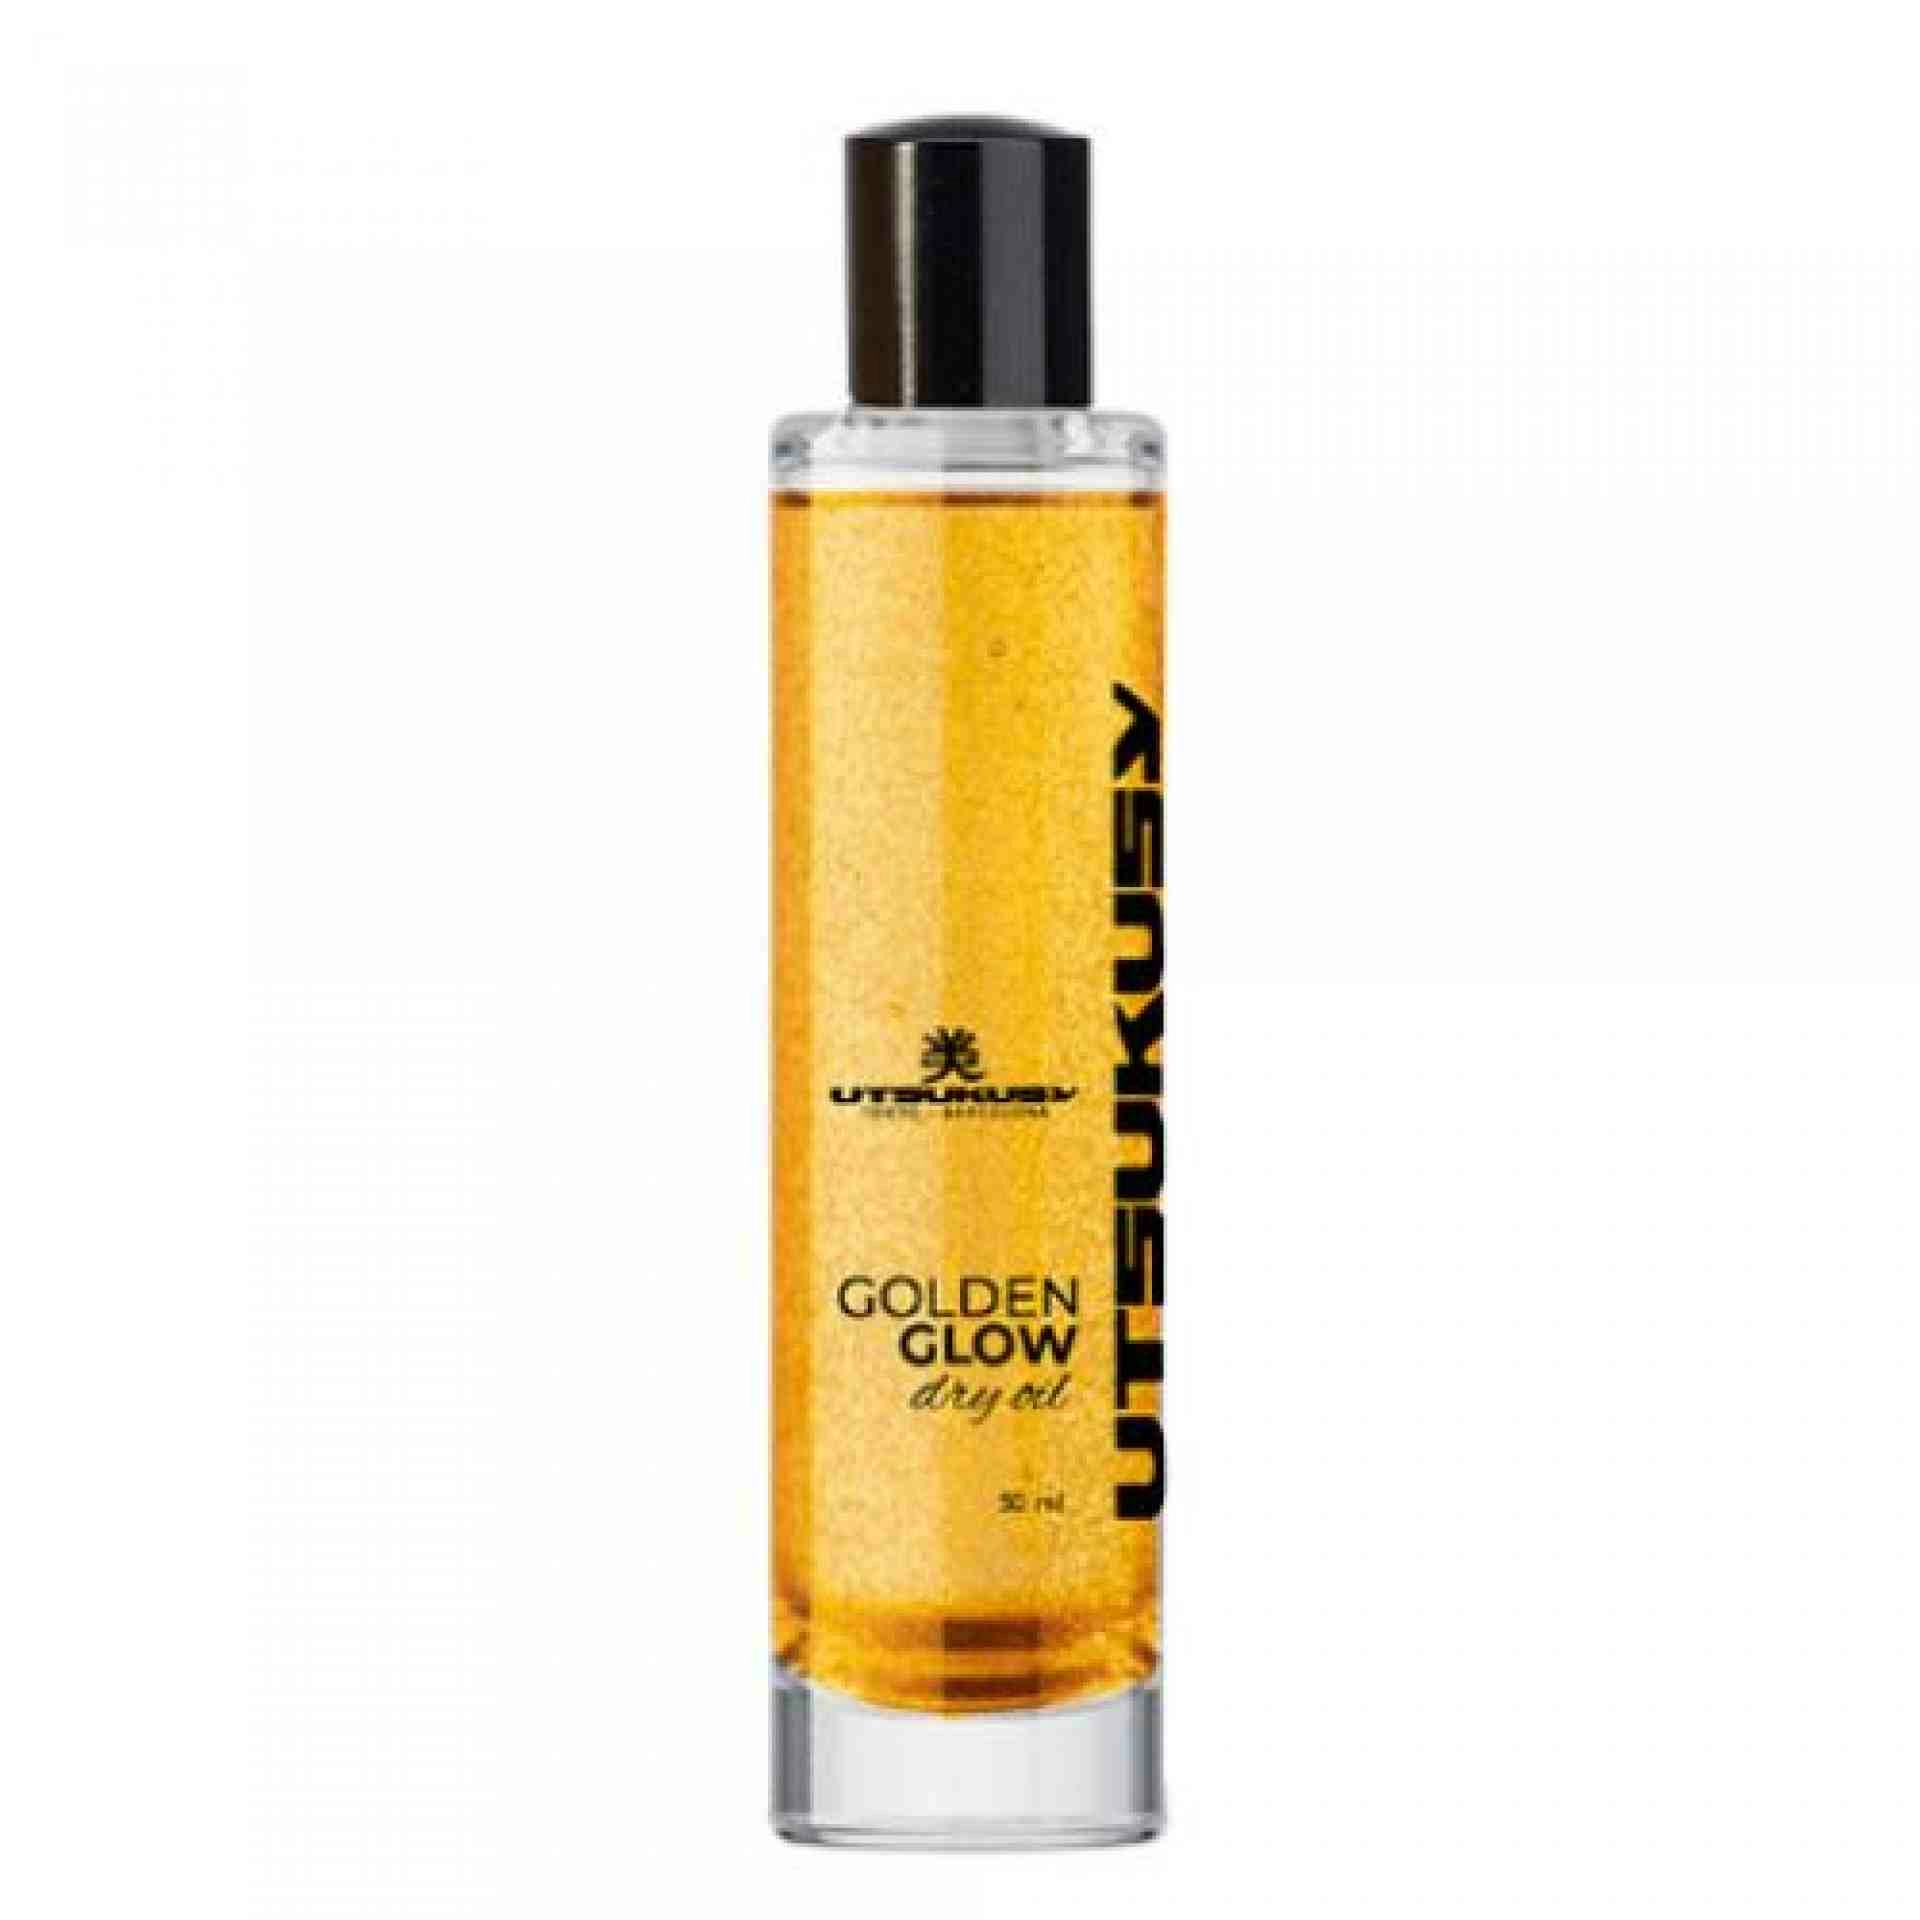 Golden Glow oil | Aceite Multifunción 50ml - Utsukusy ®